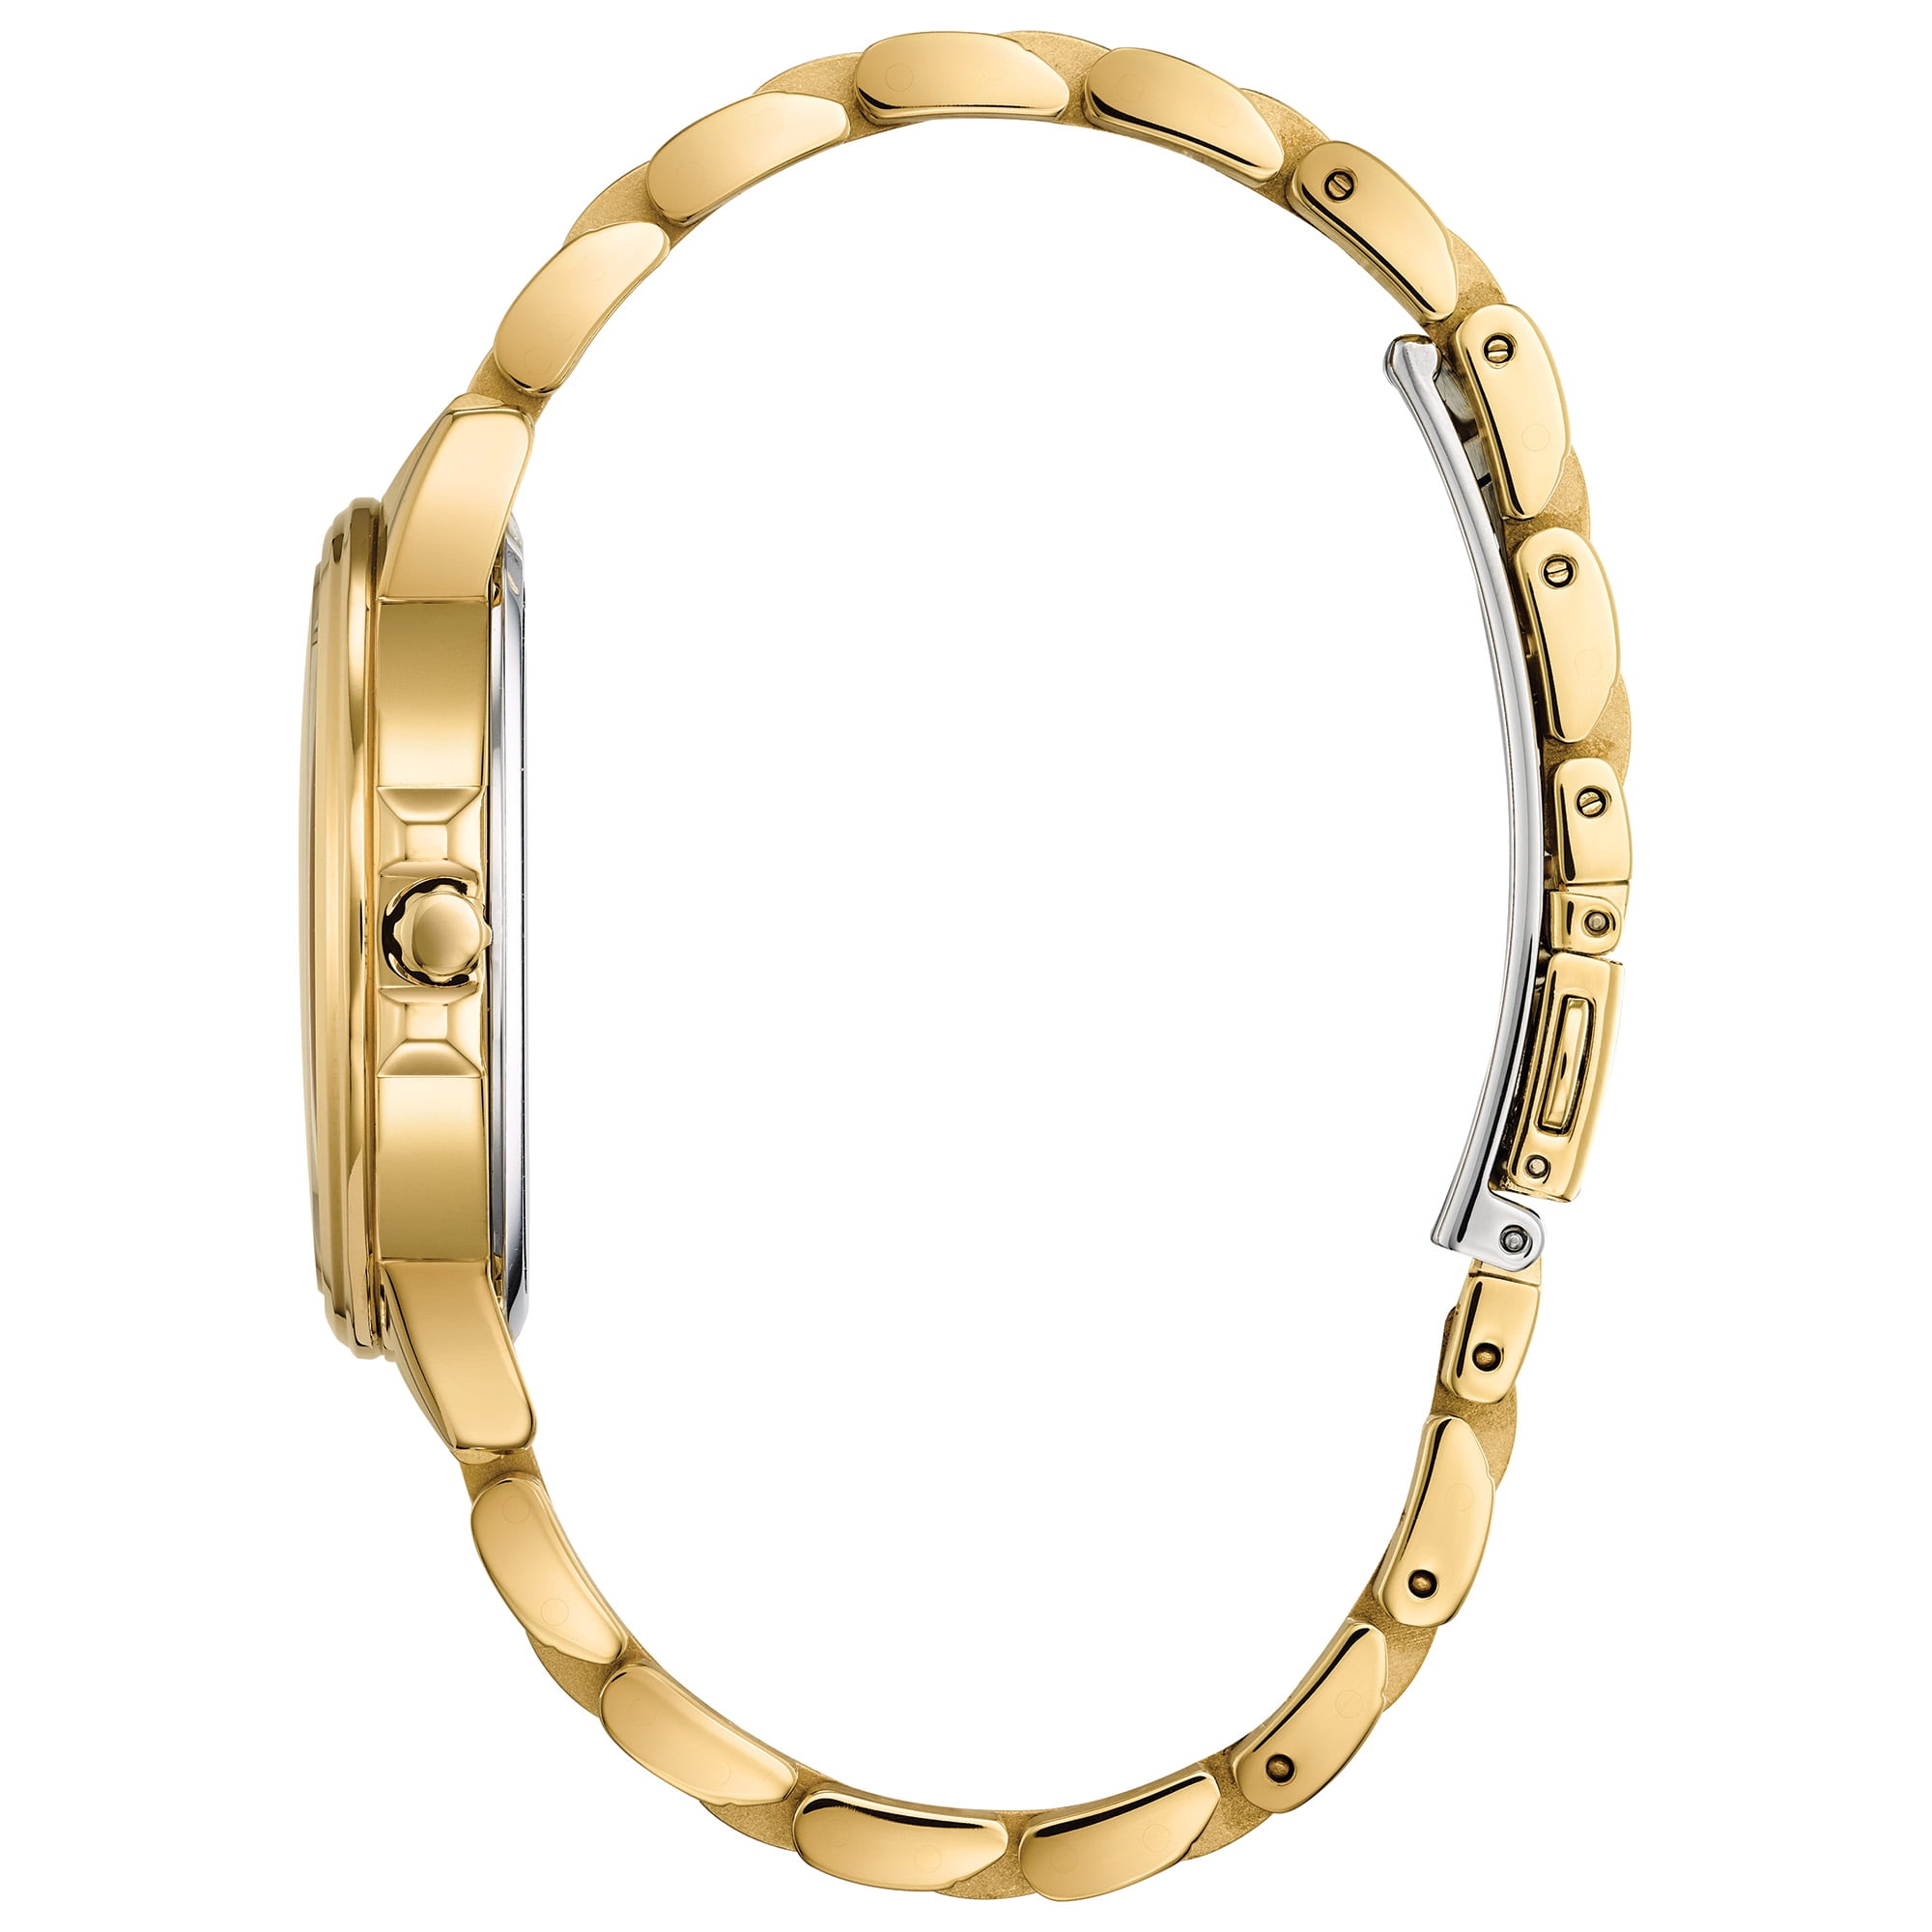 NEW✓ Citizen Eco-Drive Women's Chandler Gold-Tone Bracelet 30mm Watch  EW2522-51D | eBay